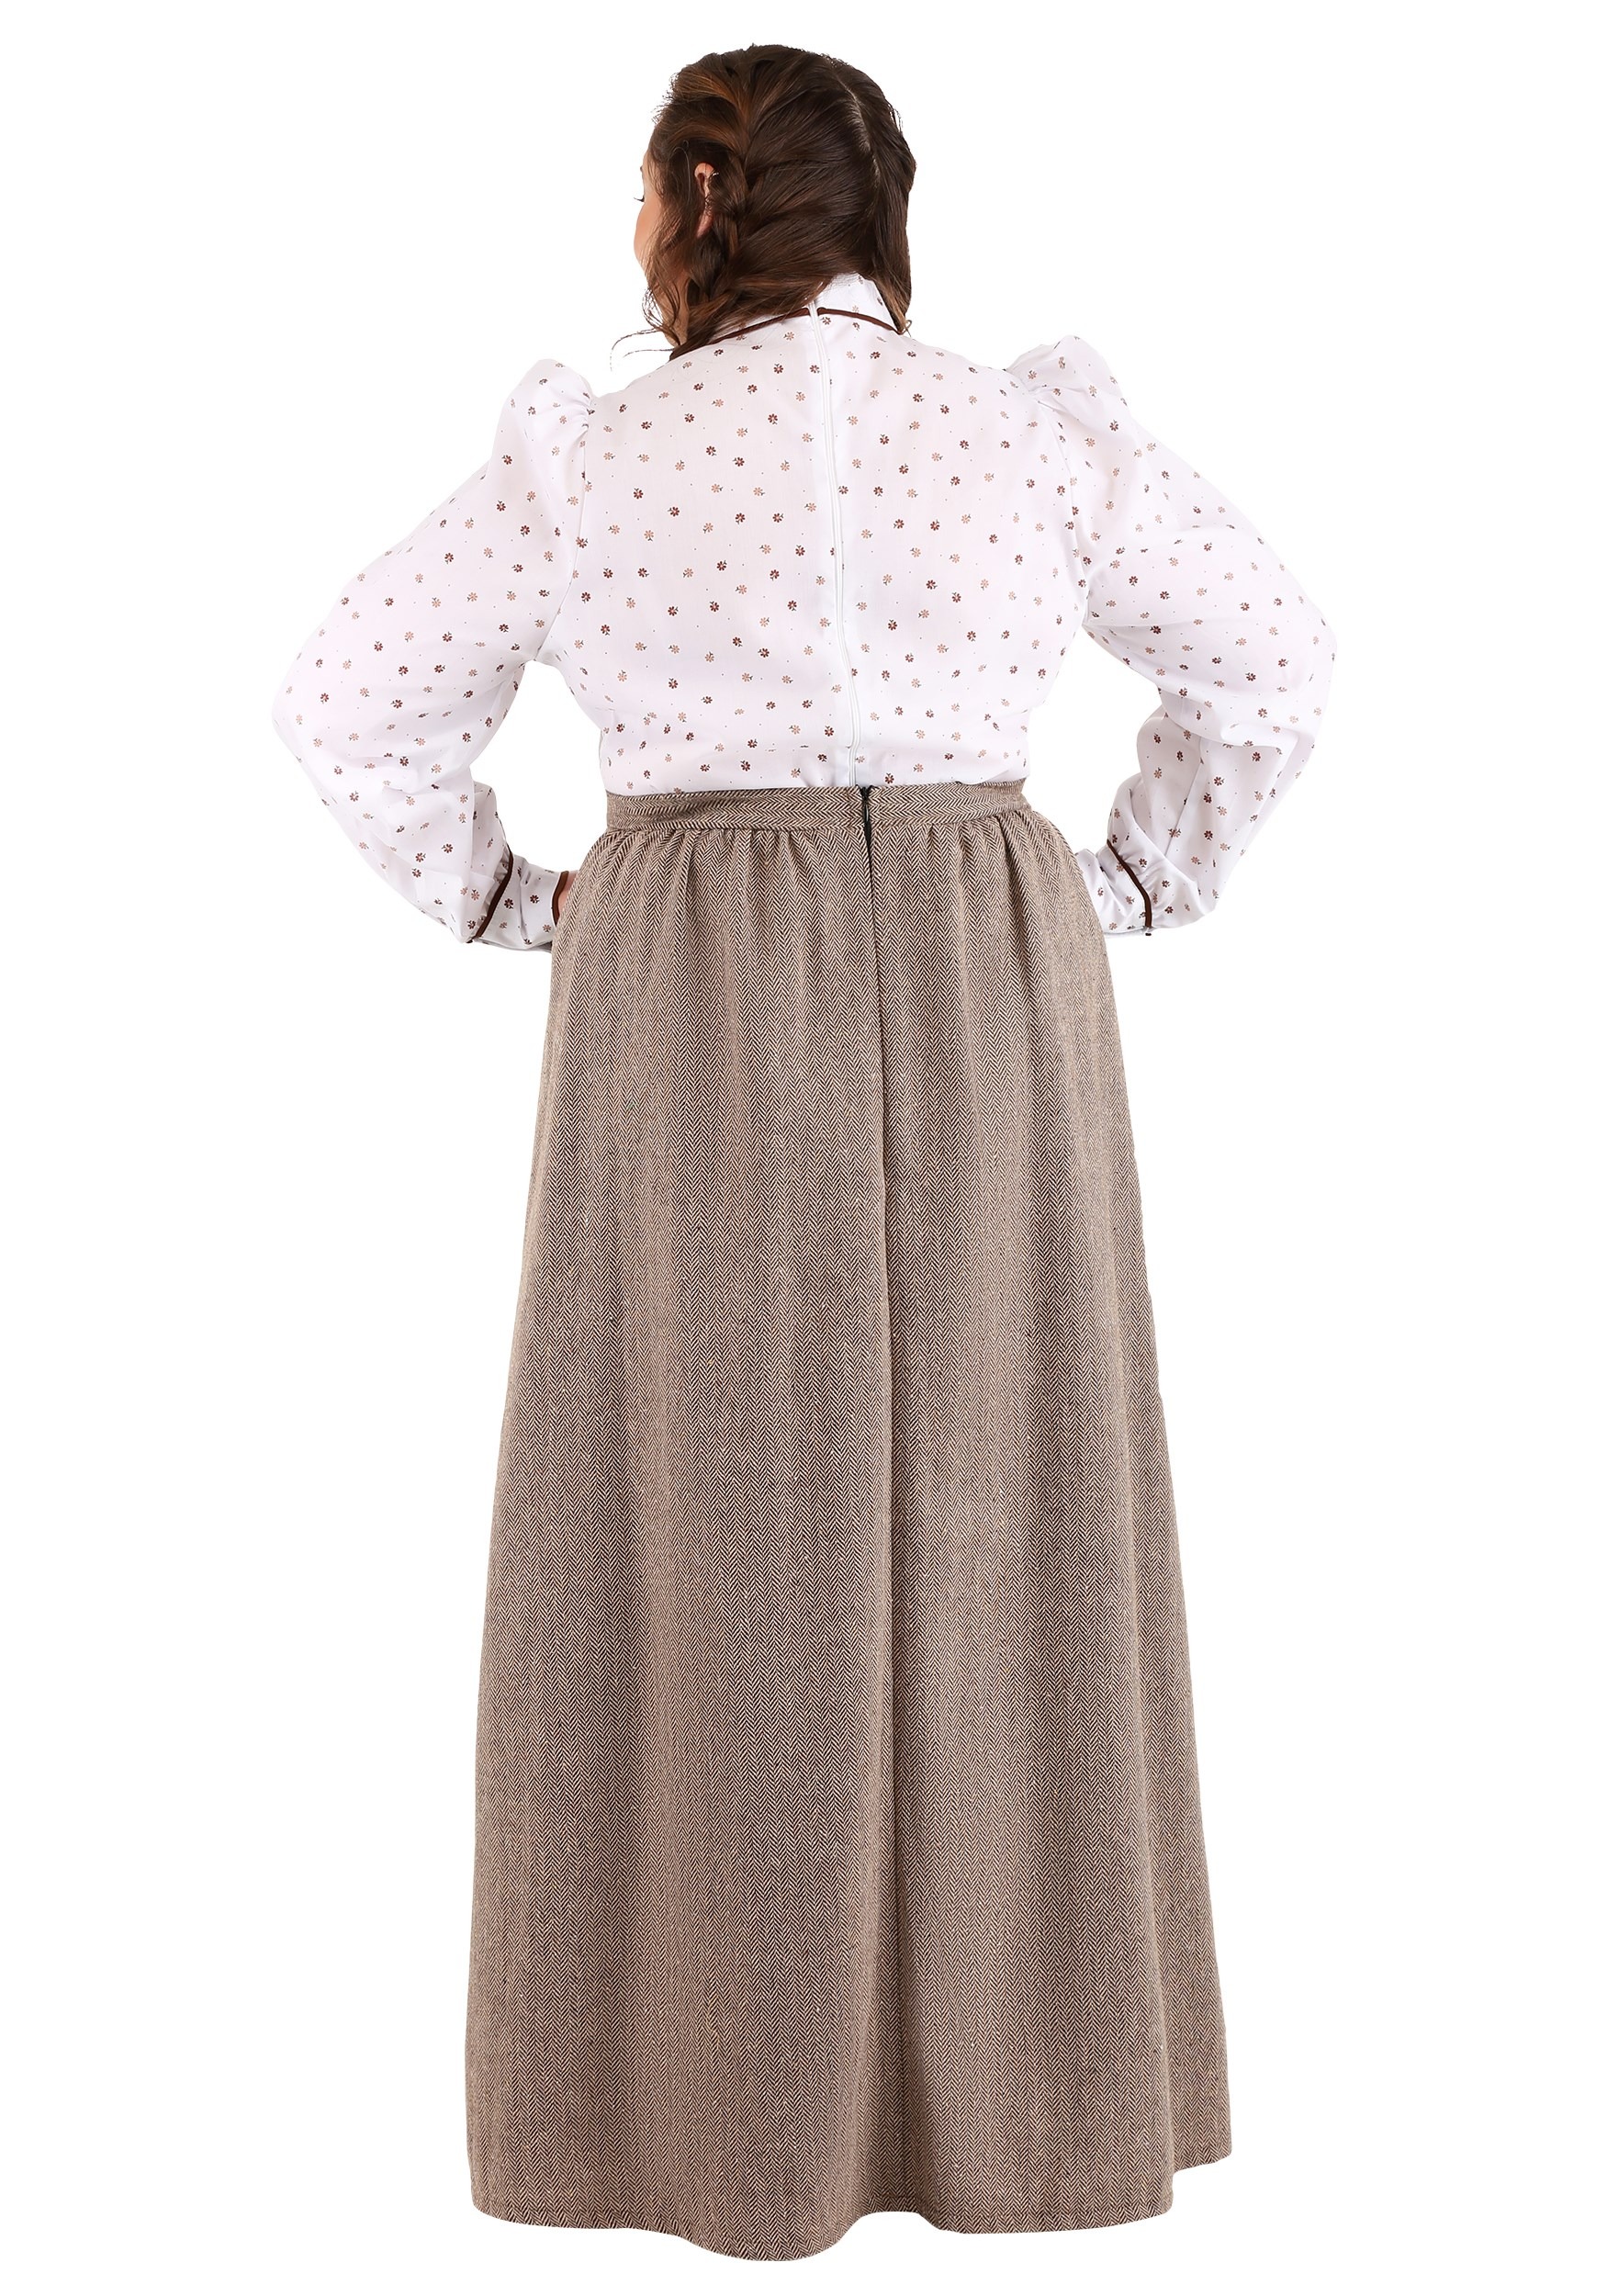  Pioneer Woman Costume Prairie Pioneer Dress Plus Size 1X :  Clothing, Shoes & Jewelry